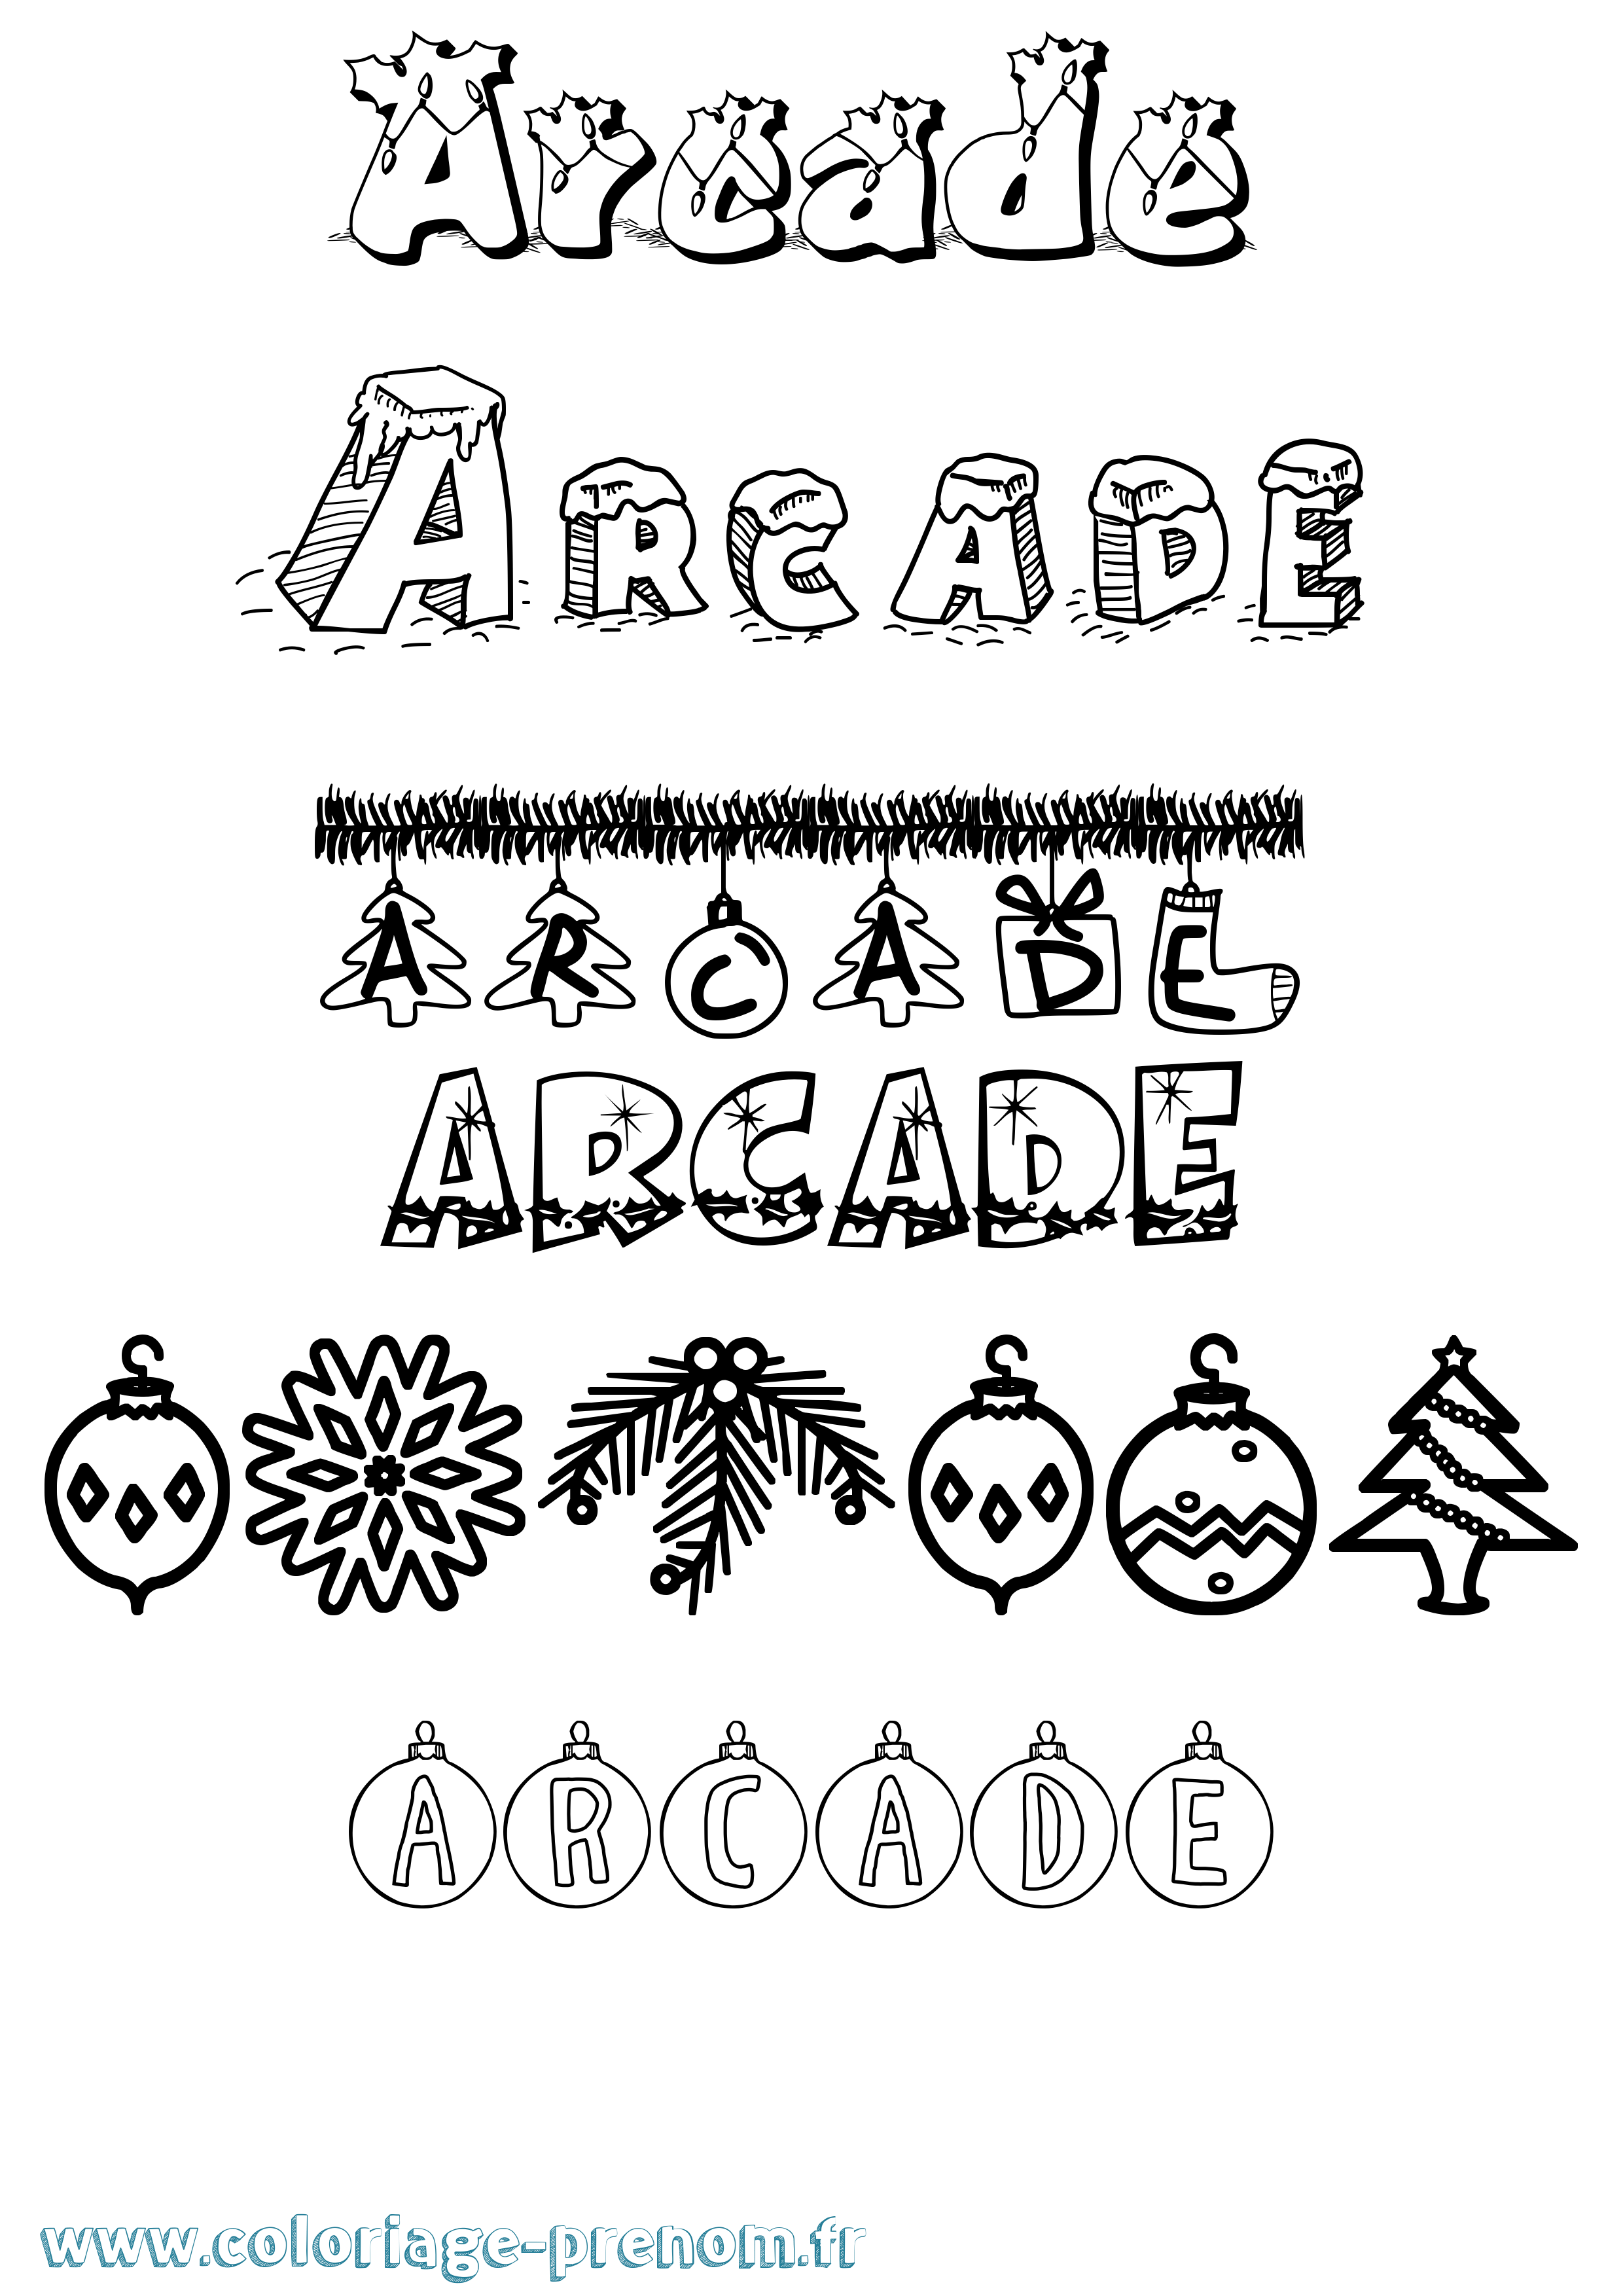 Coloriage prénom Arcade Noël